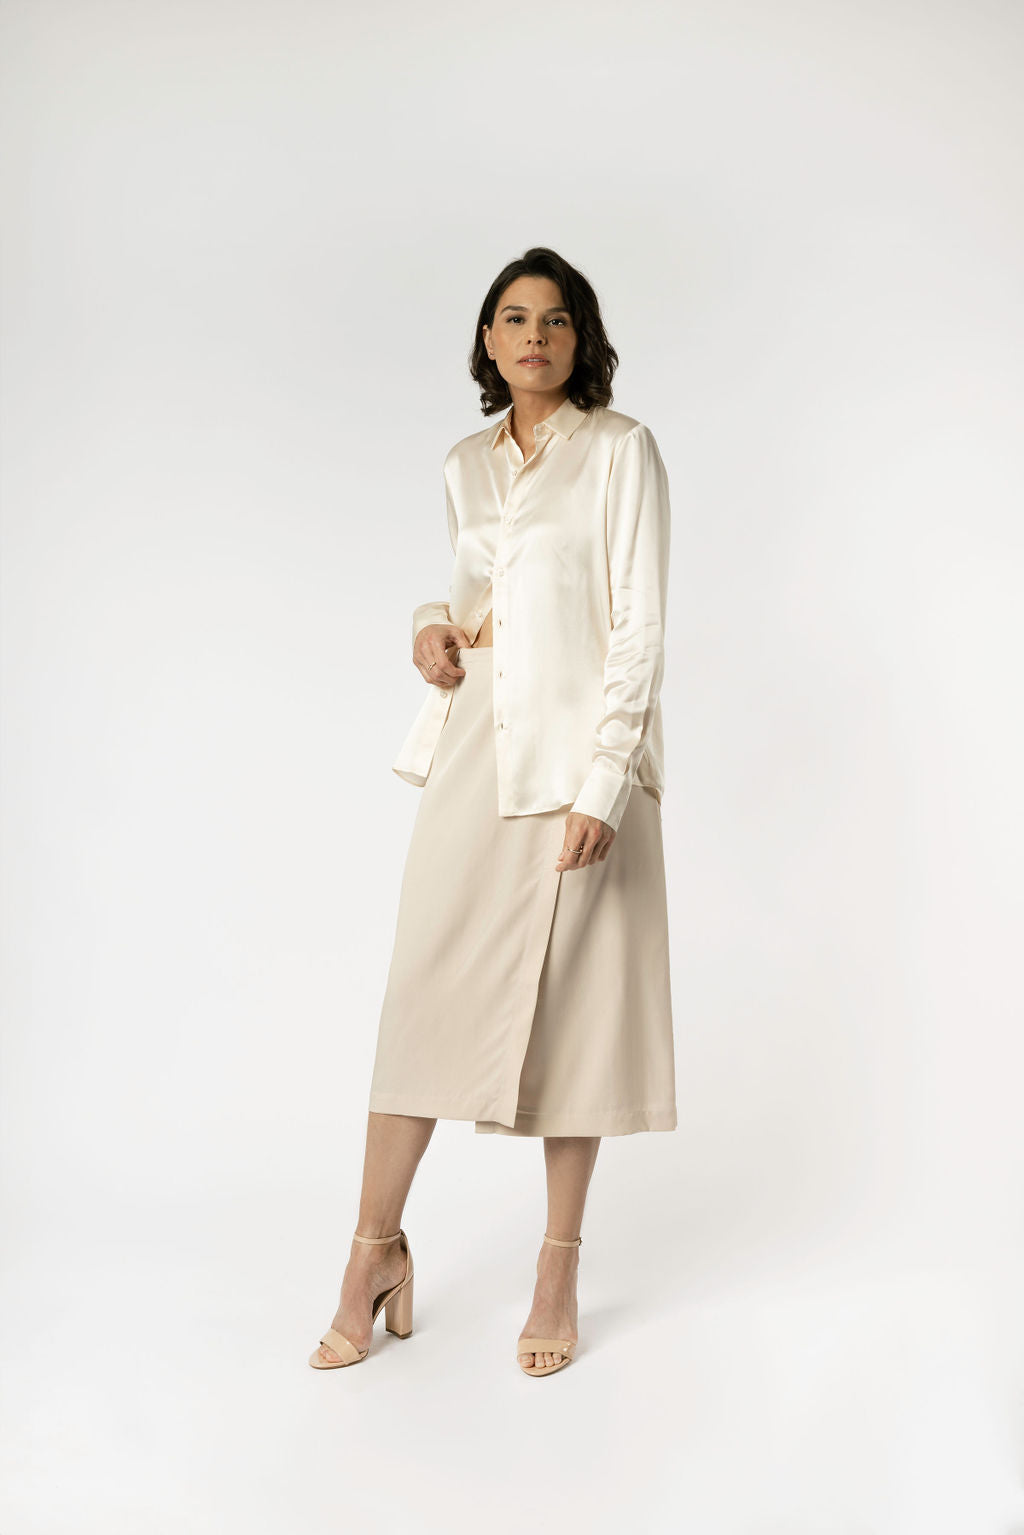 Minimalist Capsule Wardrobe for Work Cream Skirt